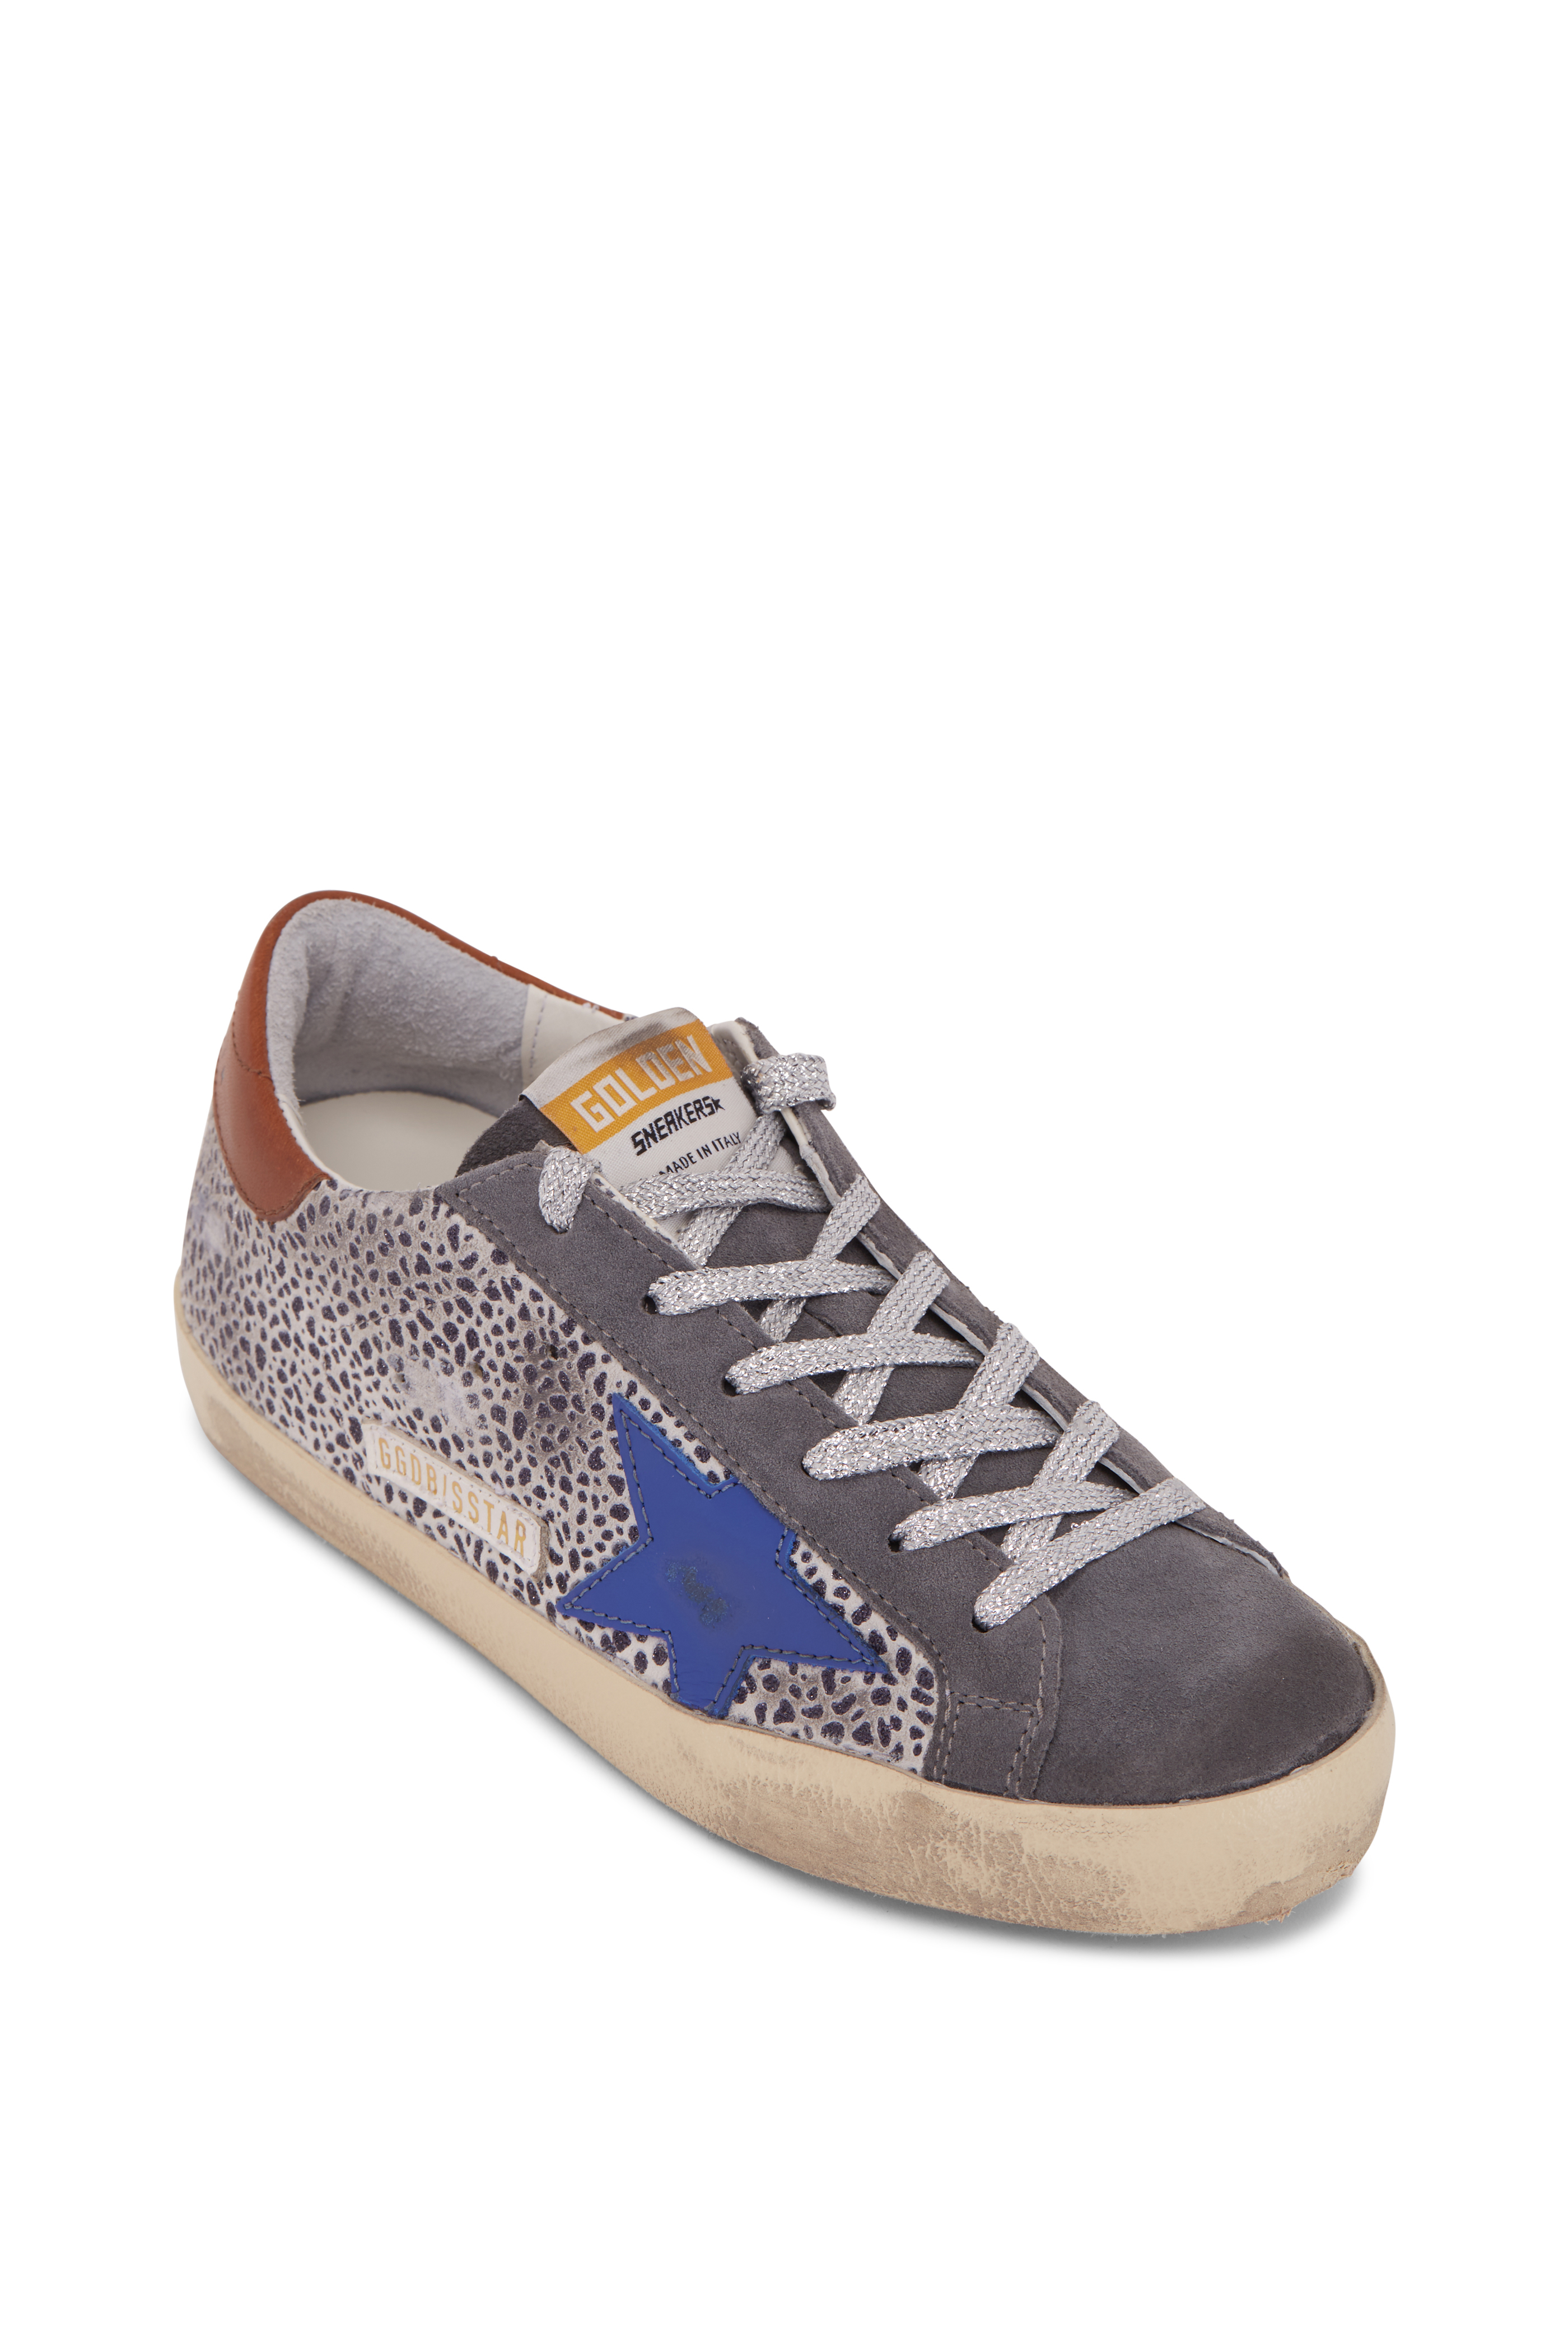 Golden Goose Running Sole Sneakers in Silver/White/Cream/Smoke Grey/Silver  – Hampden Clothing